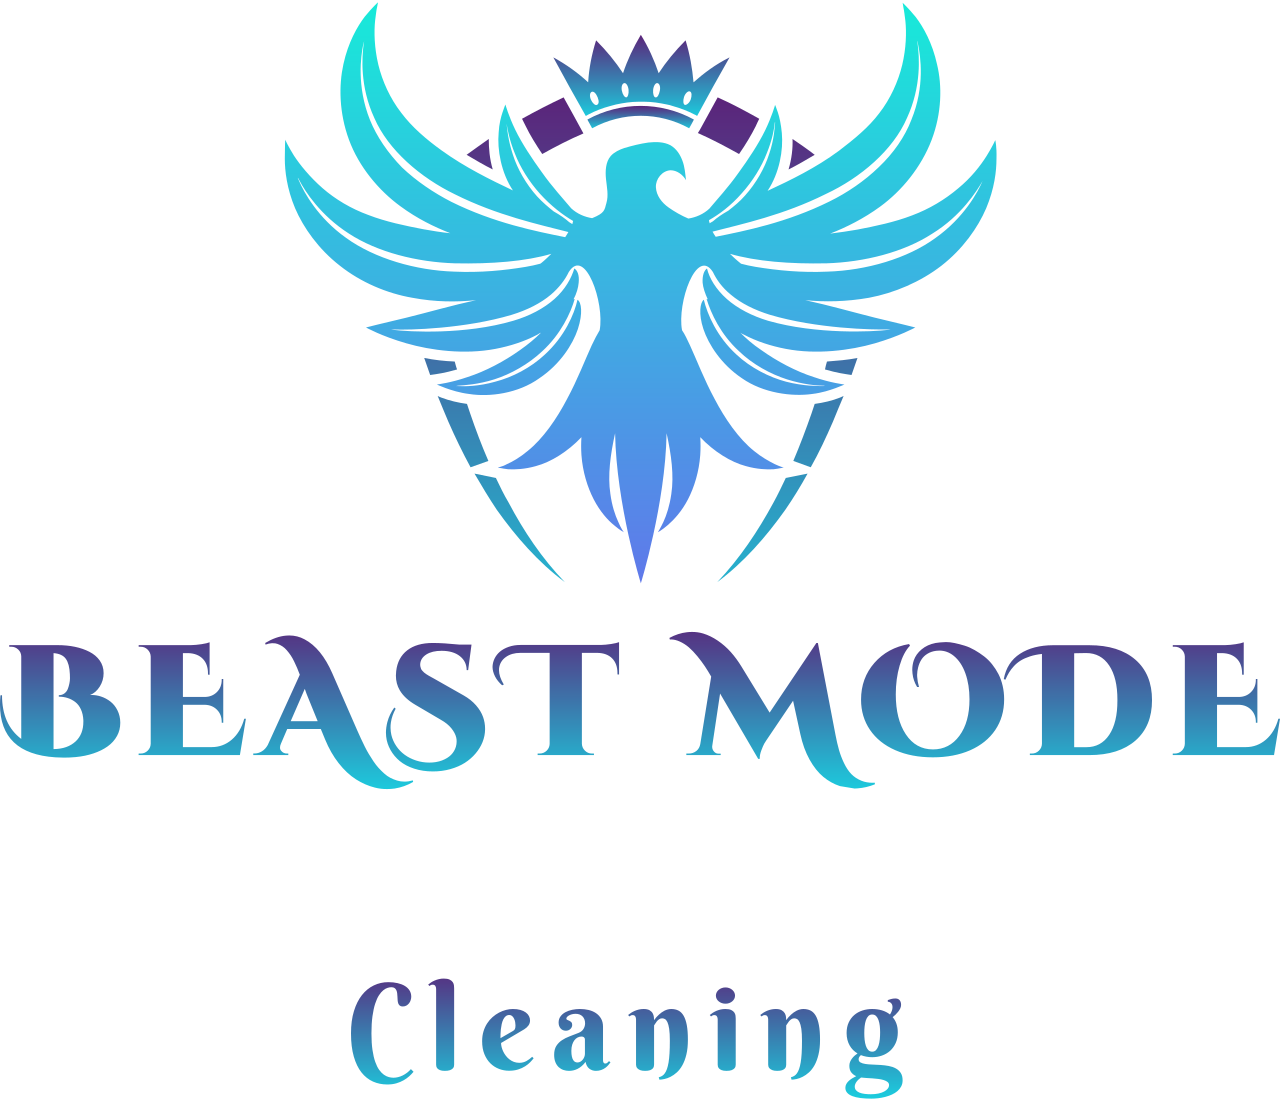 BEAST MODE's web page